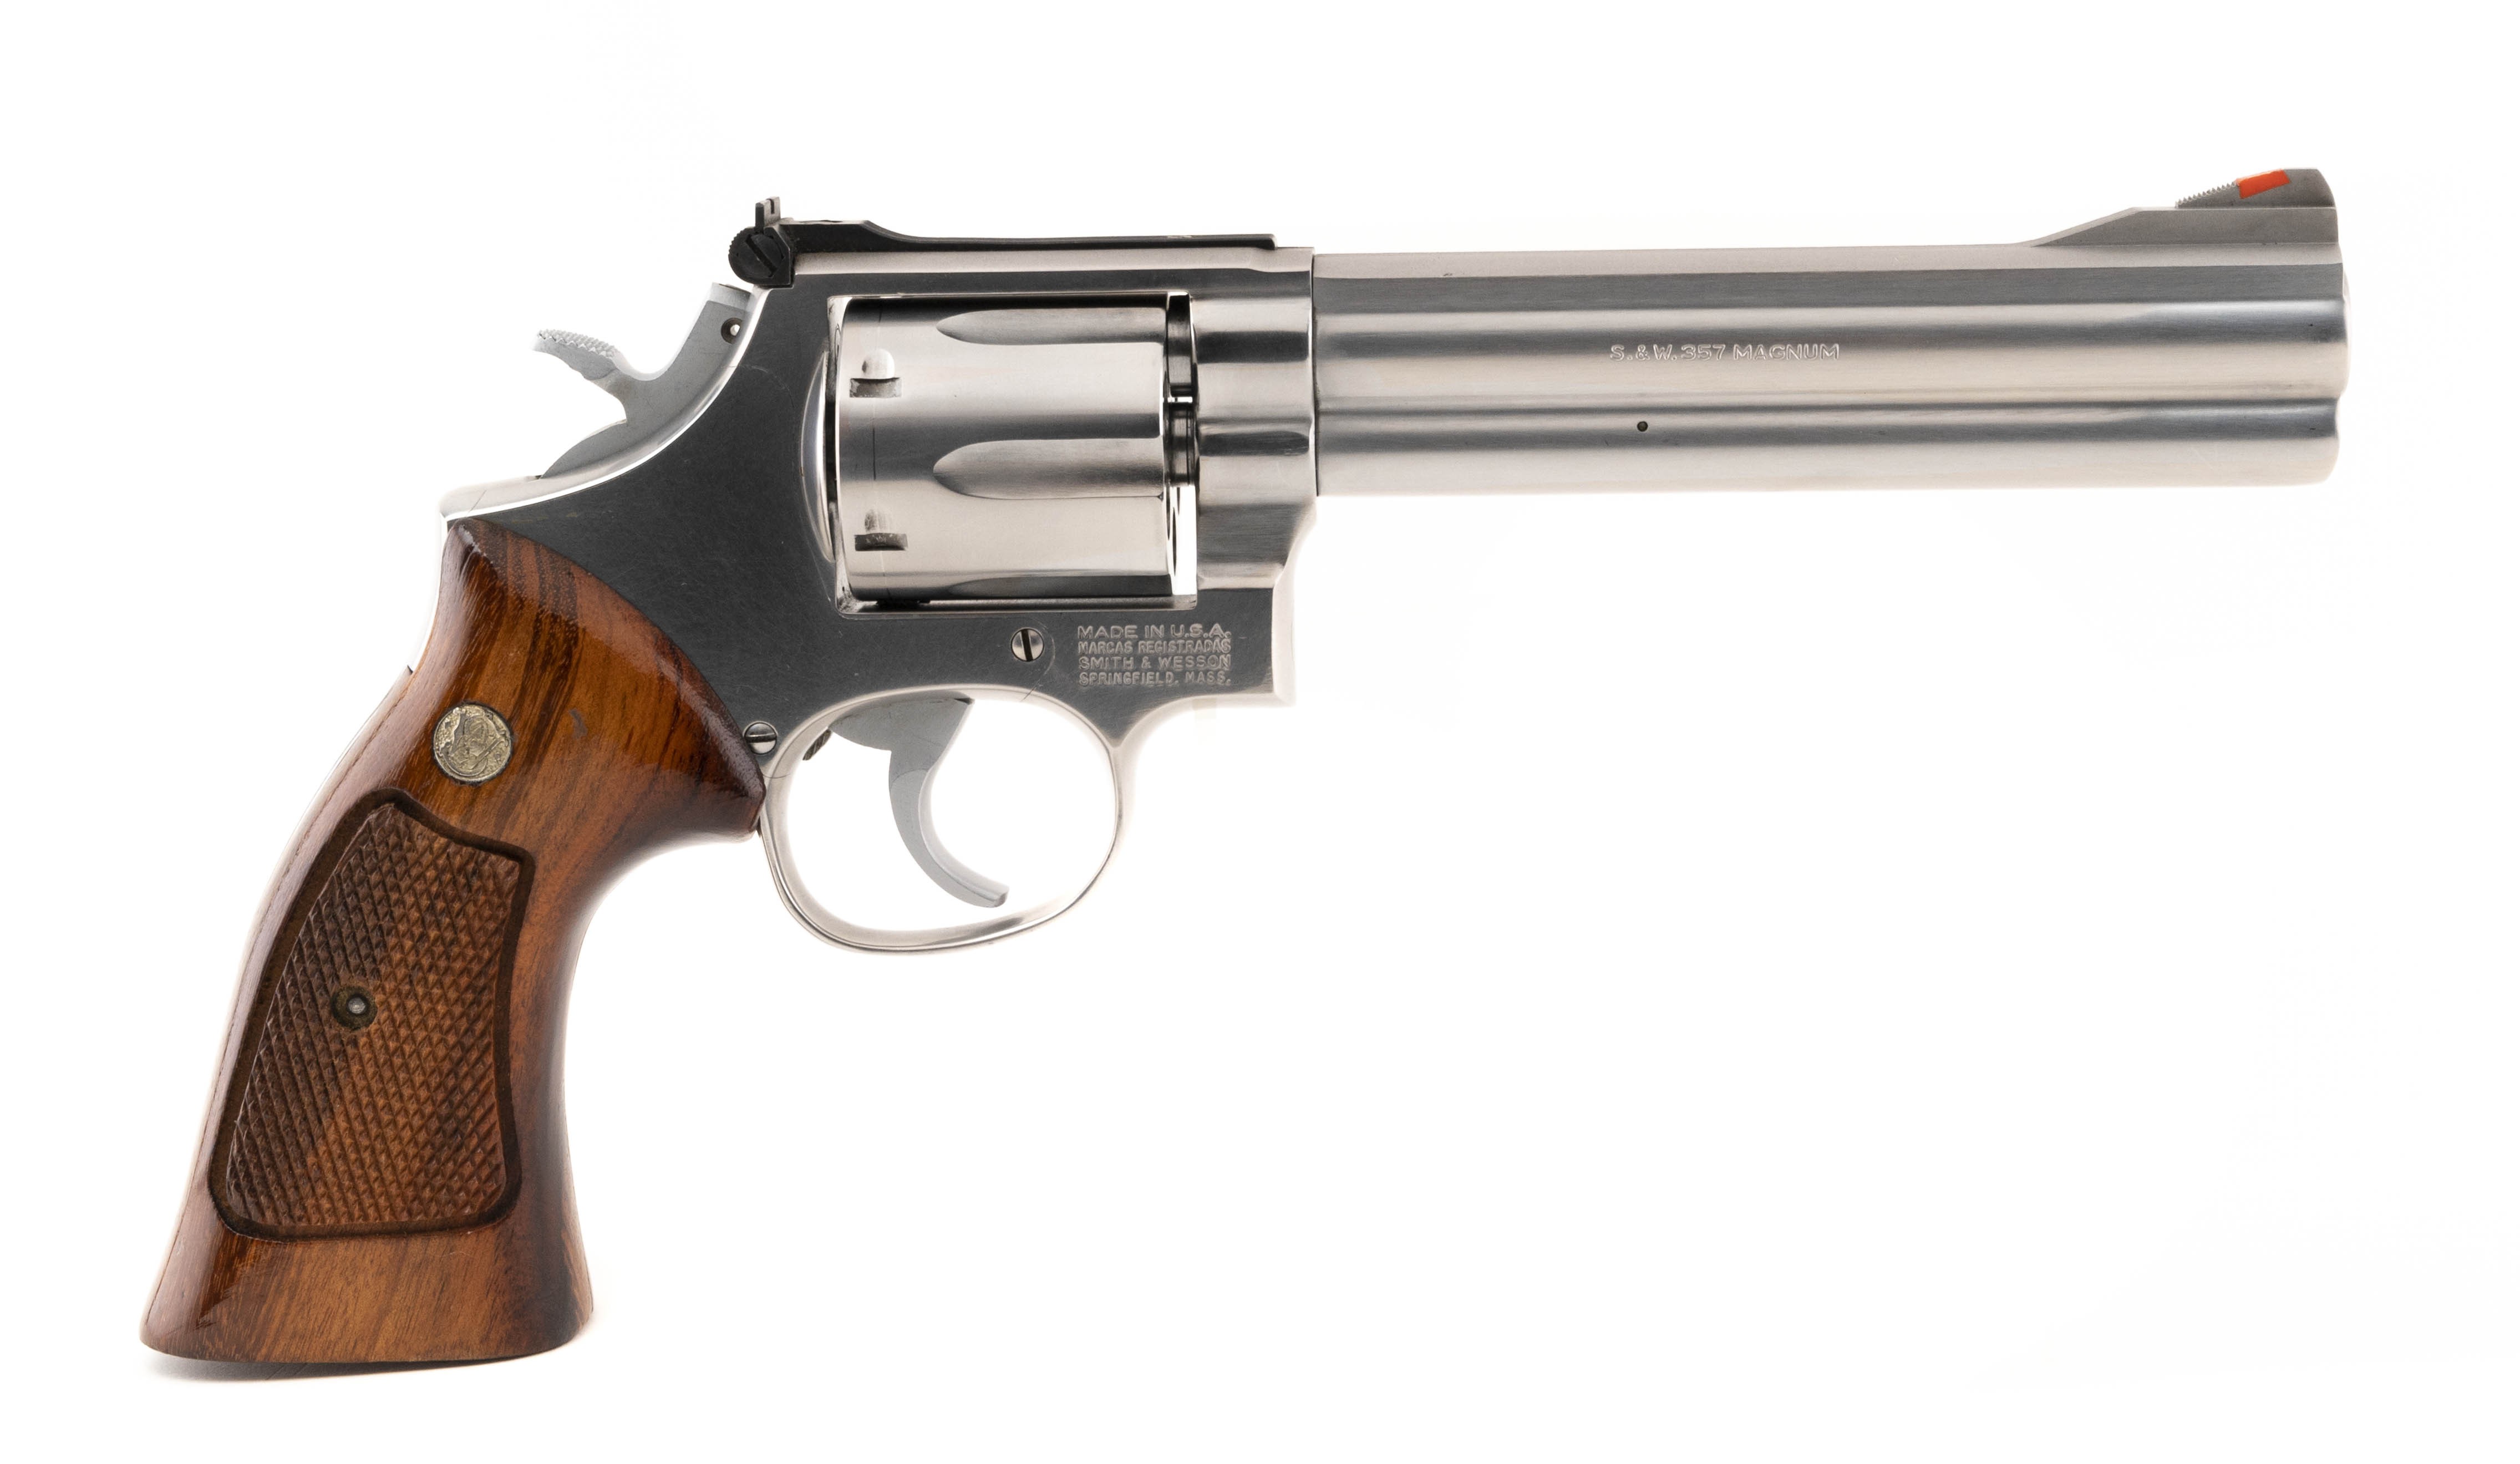 Smith & Wesson 686 .357 Magnum caliber revolver for sale.